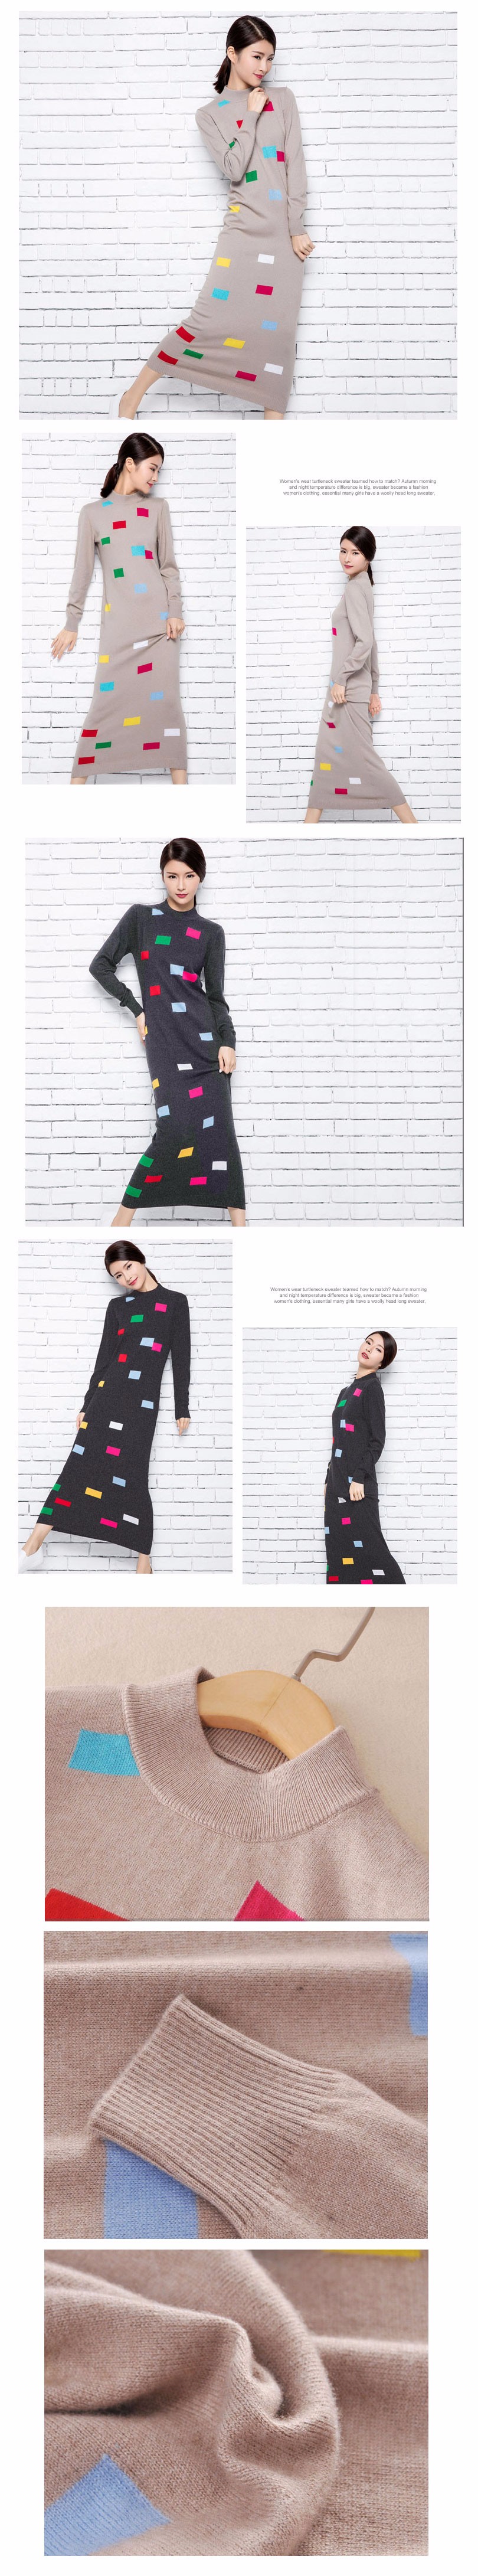 Rectangular-decorative-casual-women-dress-long-fashion-autumn-winter-women-wool-knitted-sweater-dres-32739890607